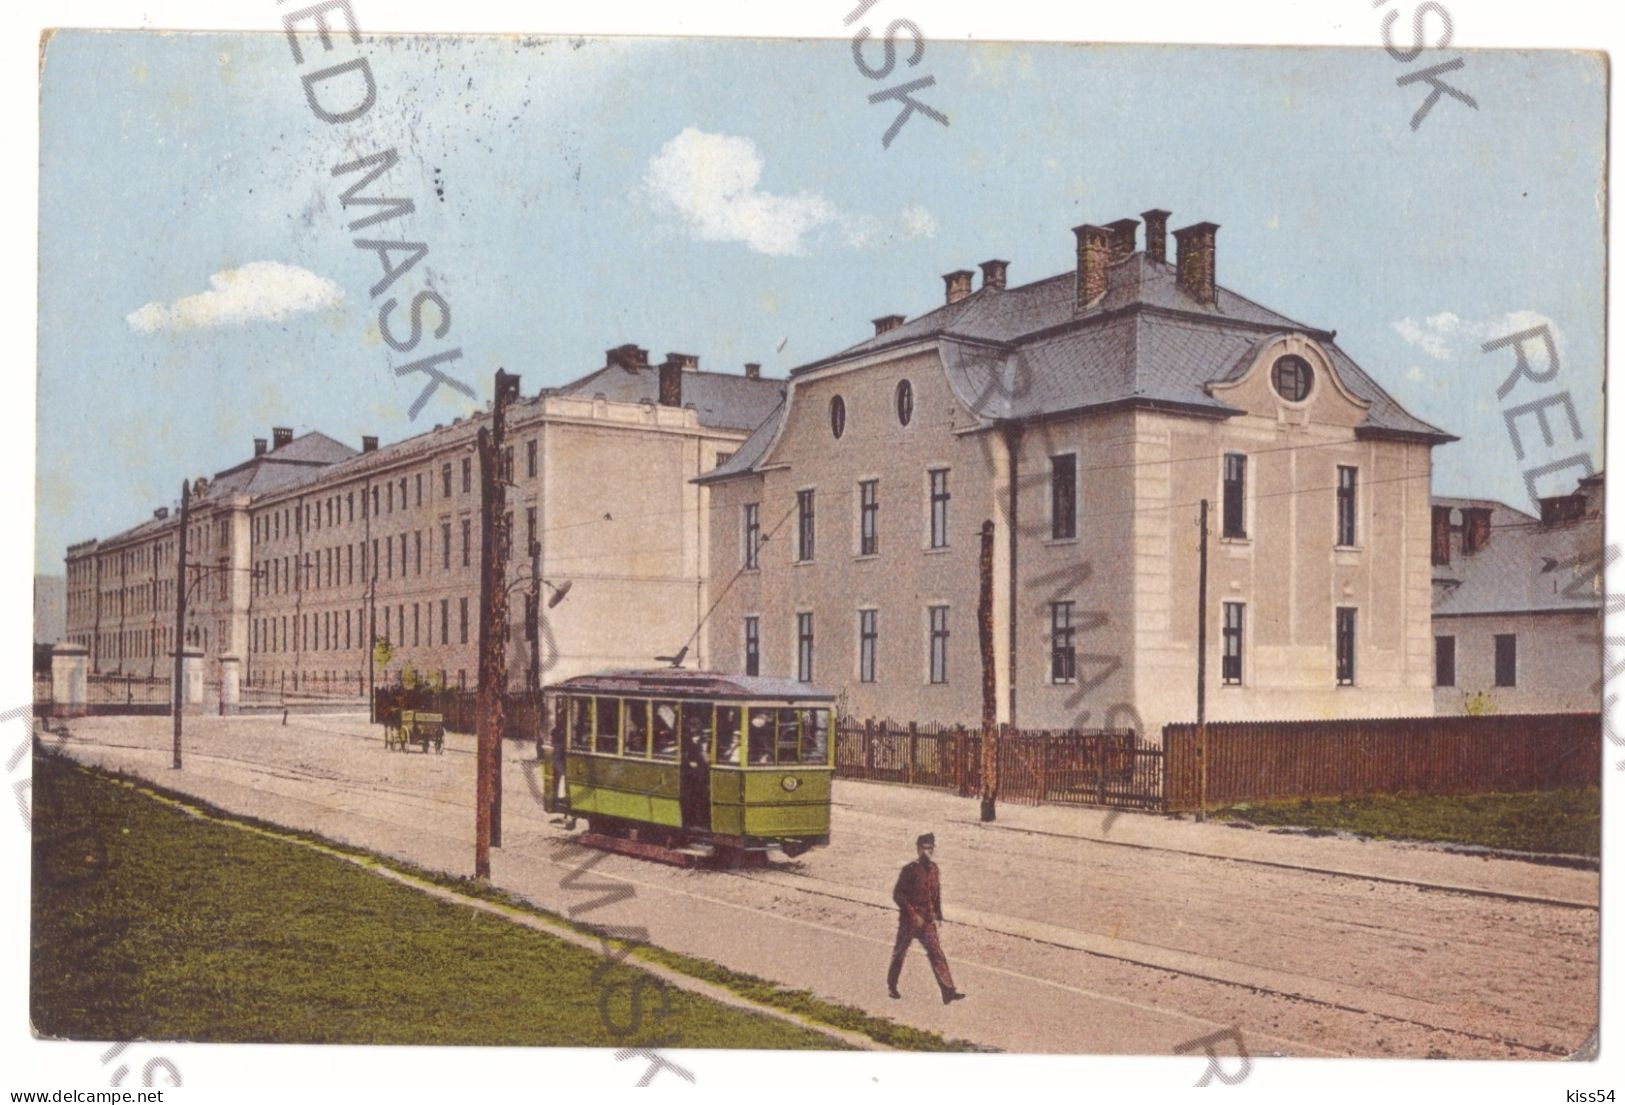 RO 91 - 19305 SIBIU, Tramway, Romania - Old Postcard - Used - 1913 - Roumanie